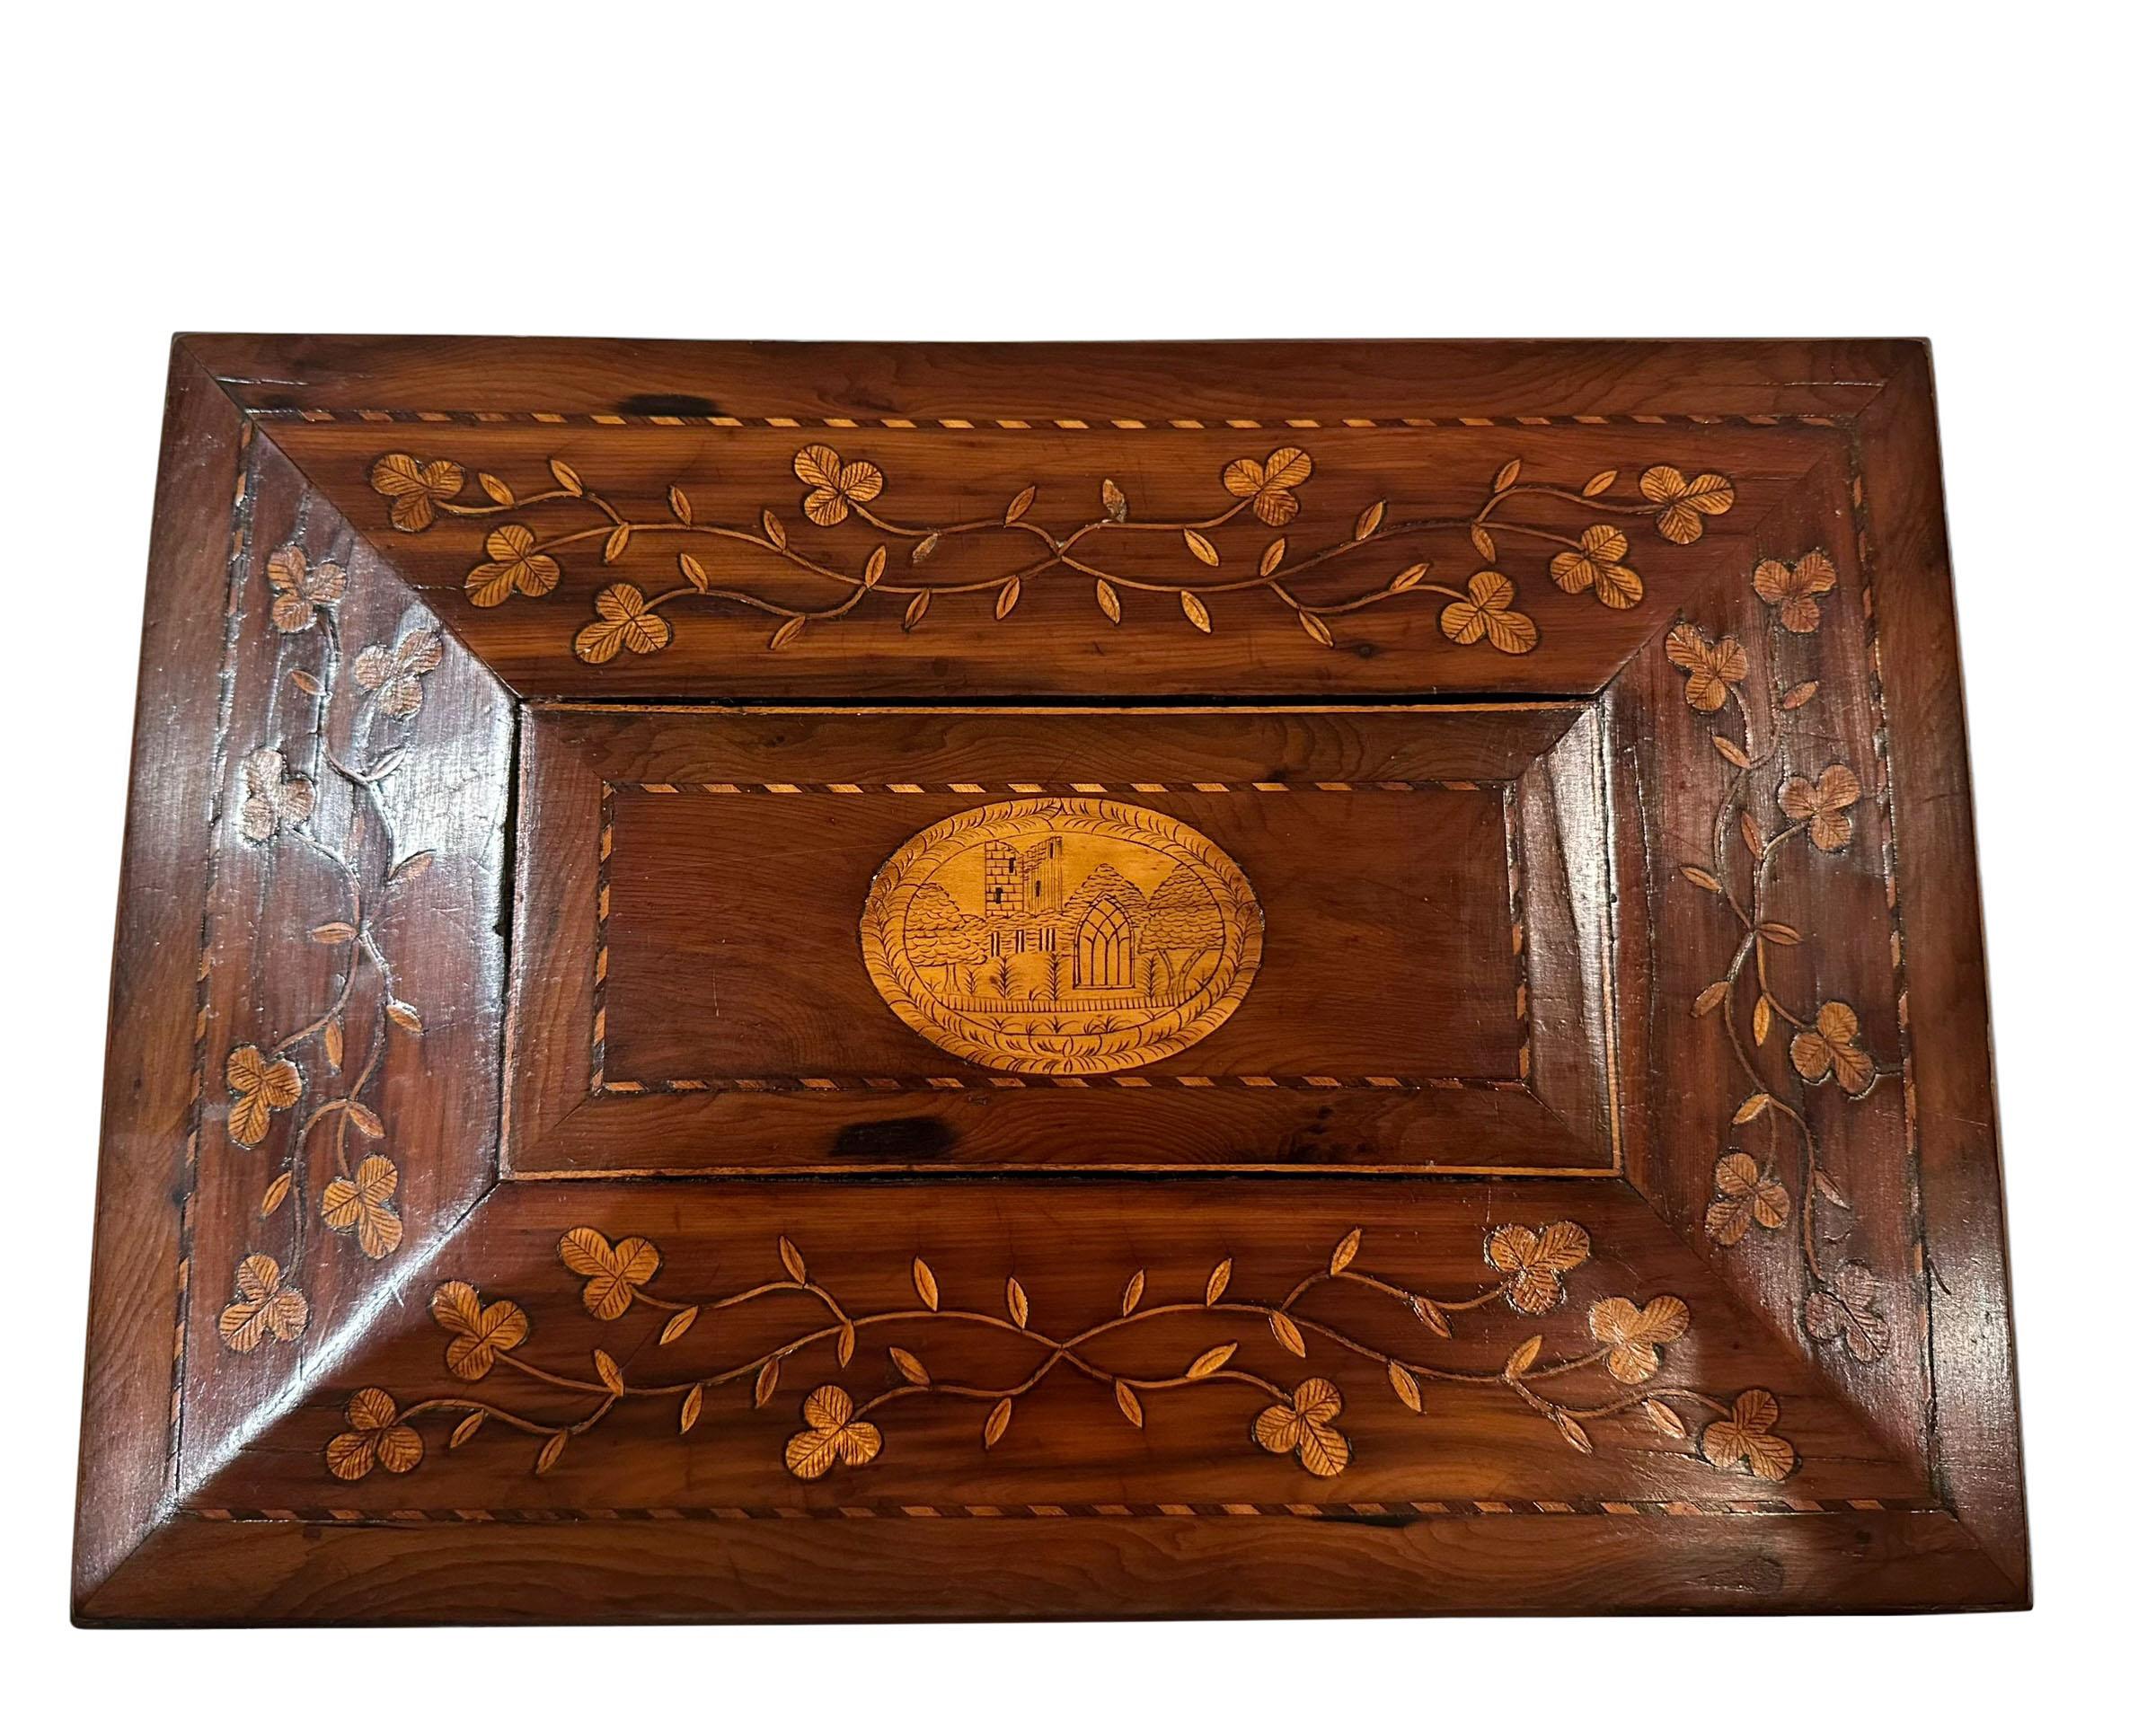 Early 19th century Irish work box decorated with shamrocks and beautifully inlaid.
